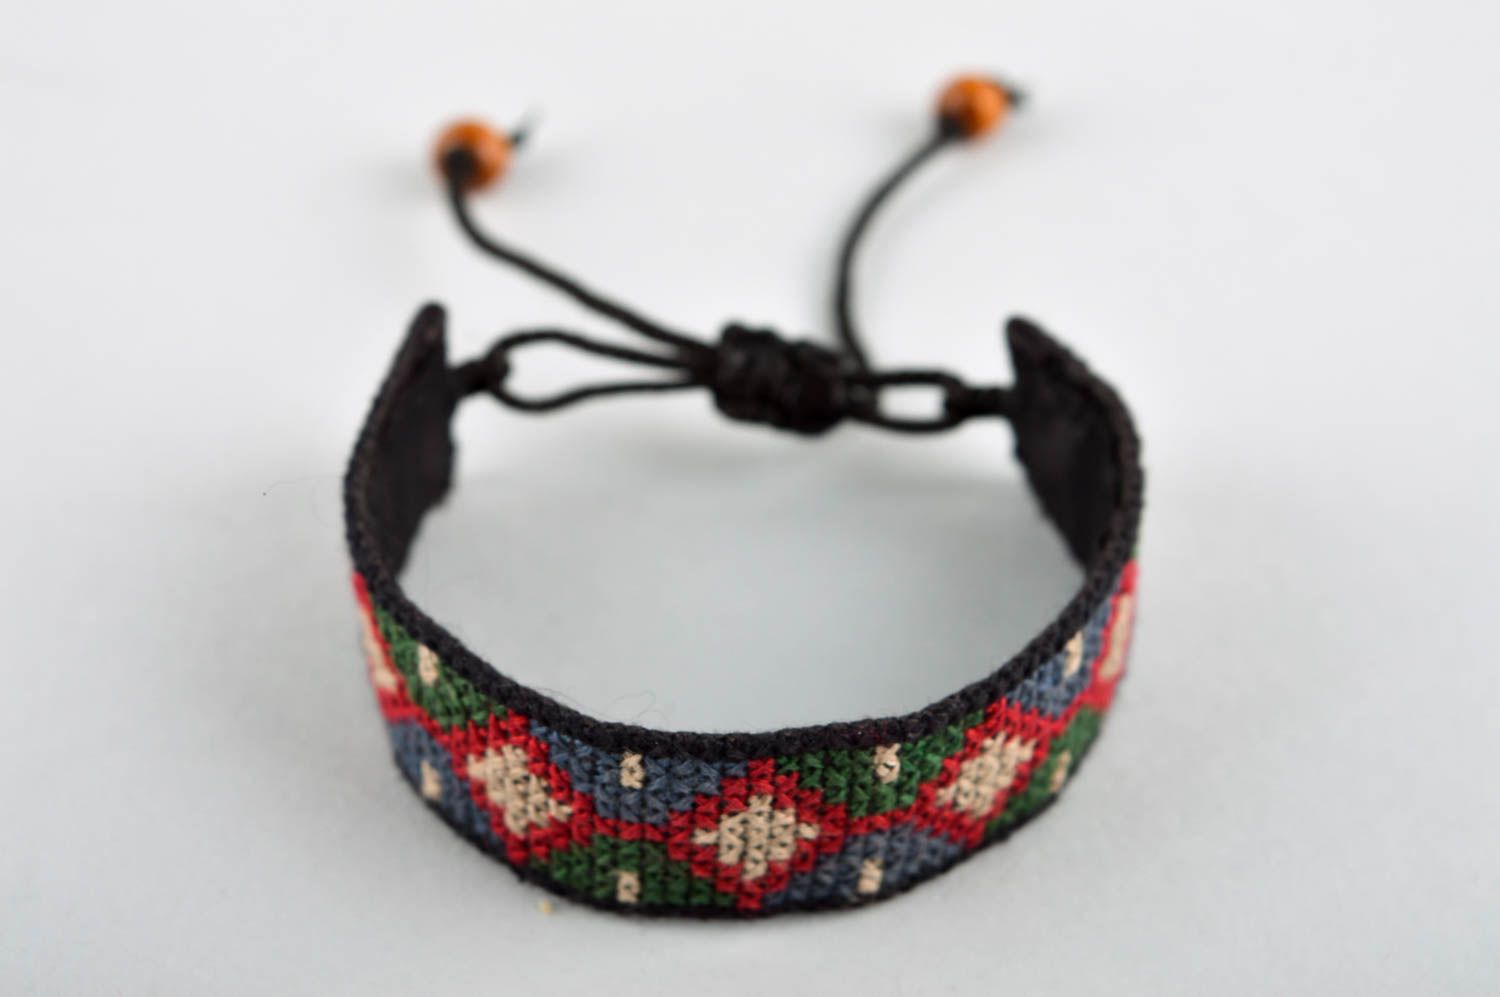 Handmade textile bracelet designs modern embroidery costume jewelry gift ideas photo 2